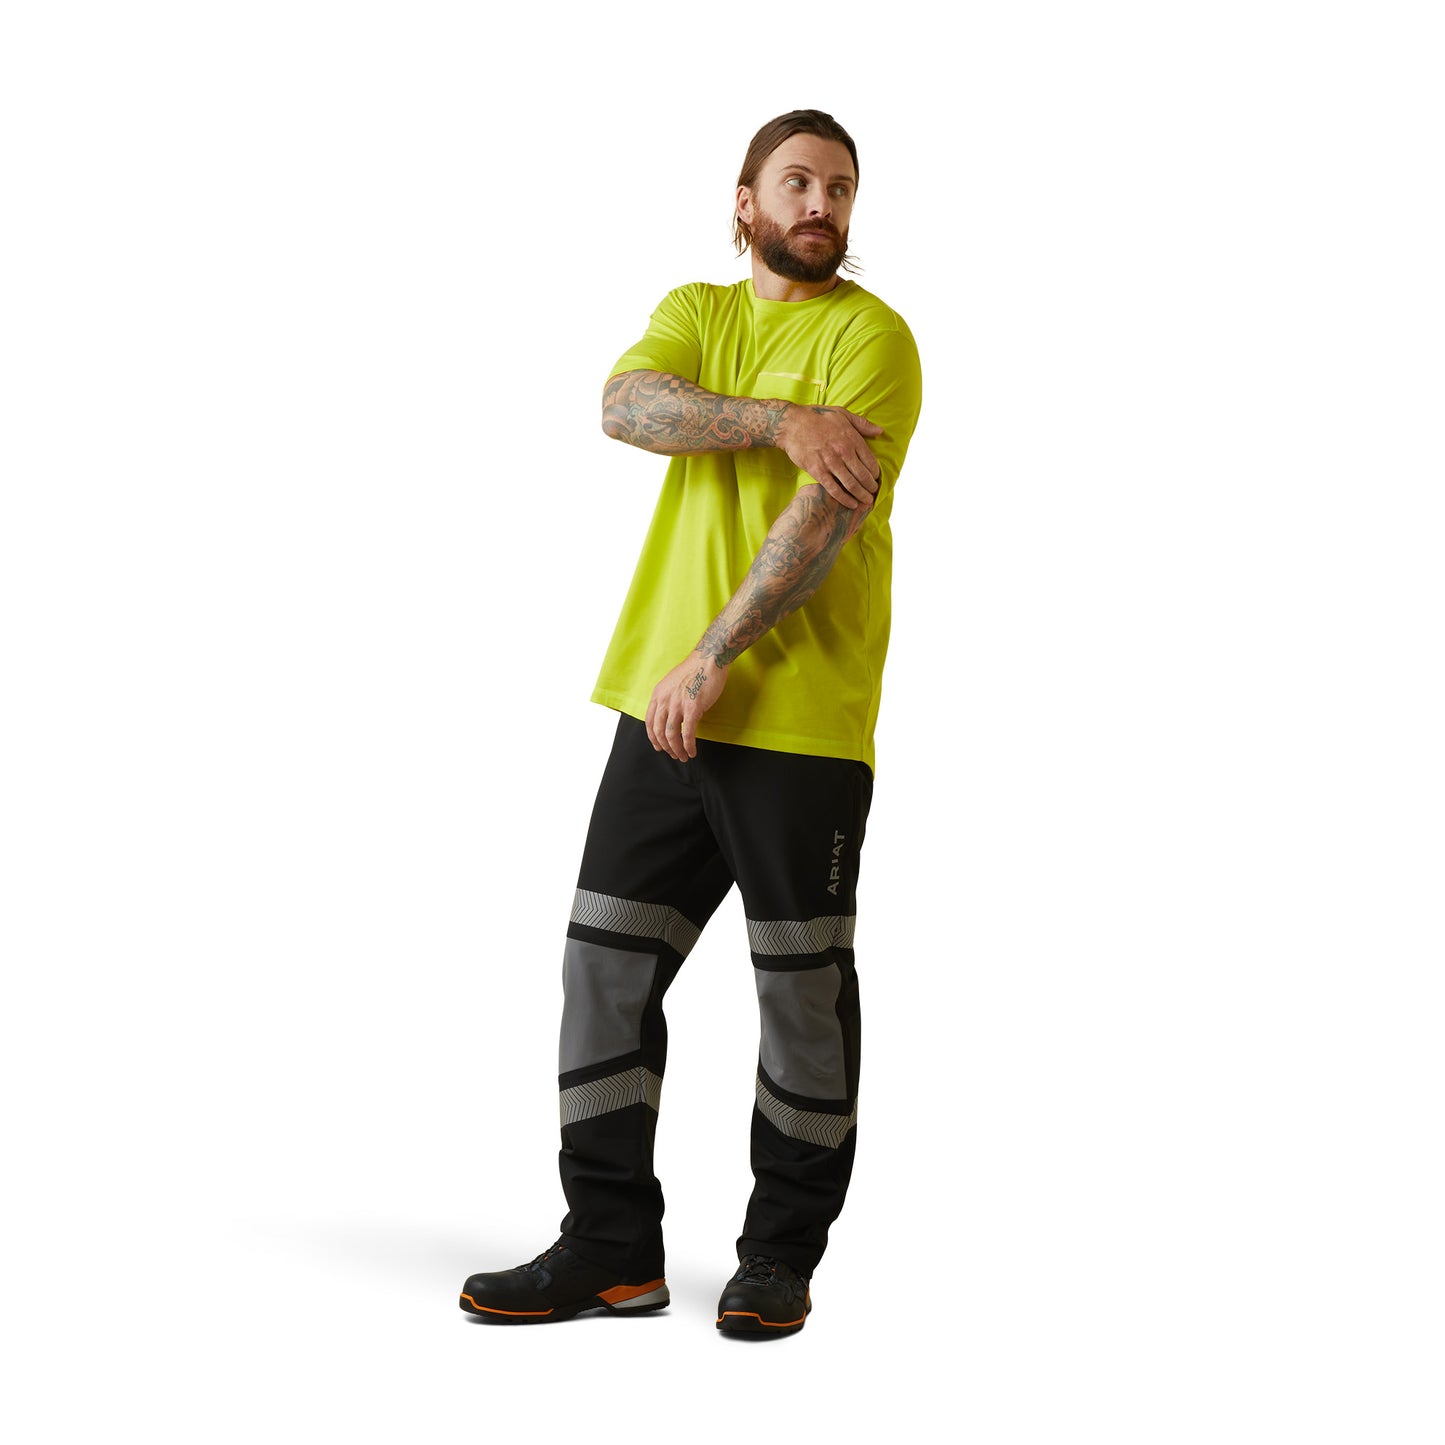 Ariat® Men's Rebar Workman Sulphur Springs Yellow T-Shirt 10043535